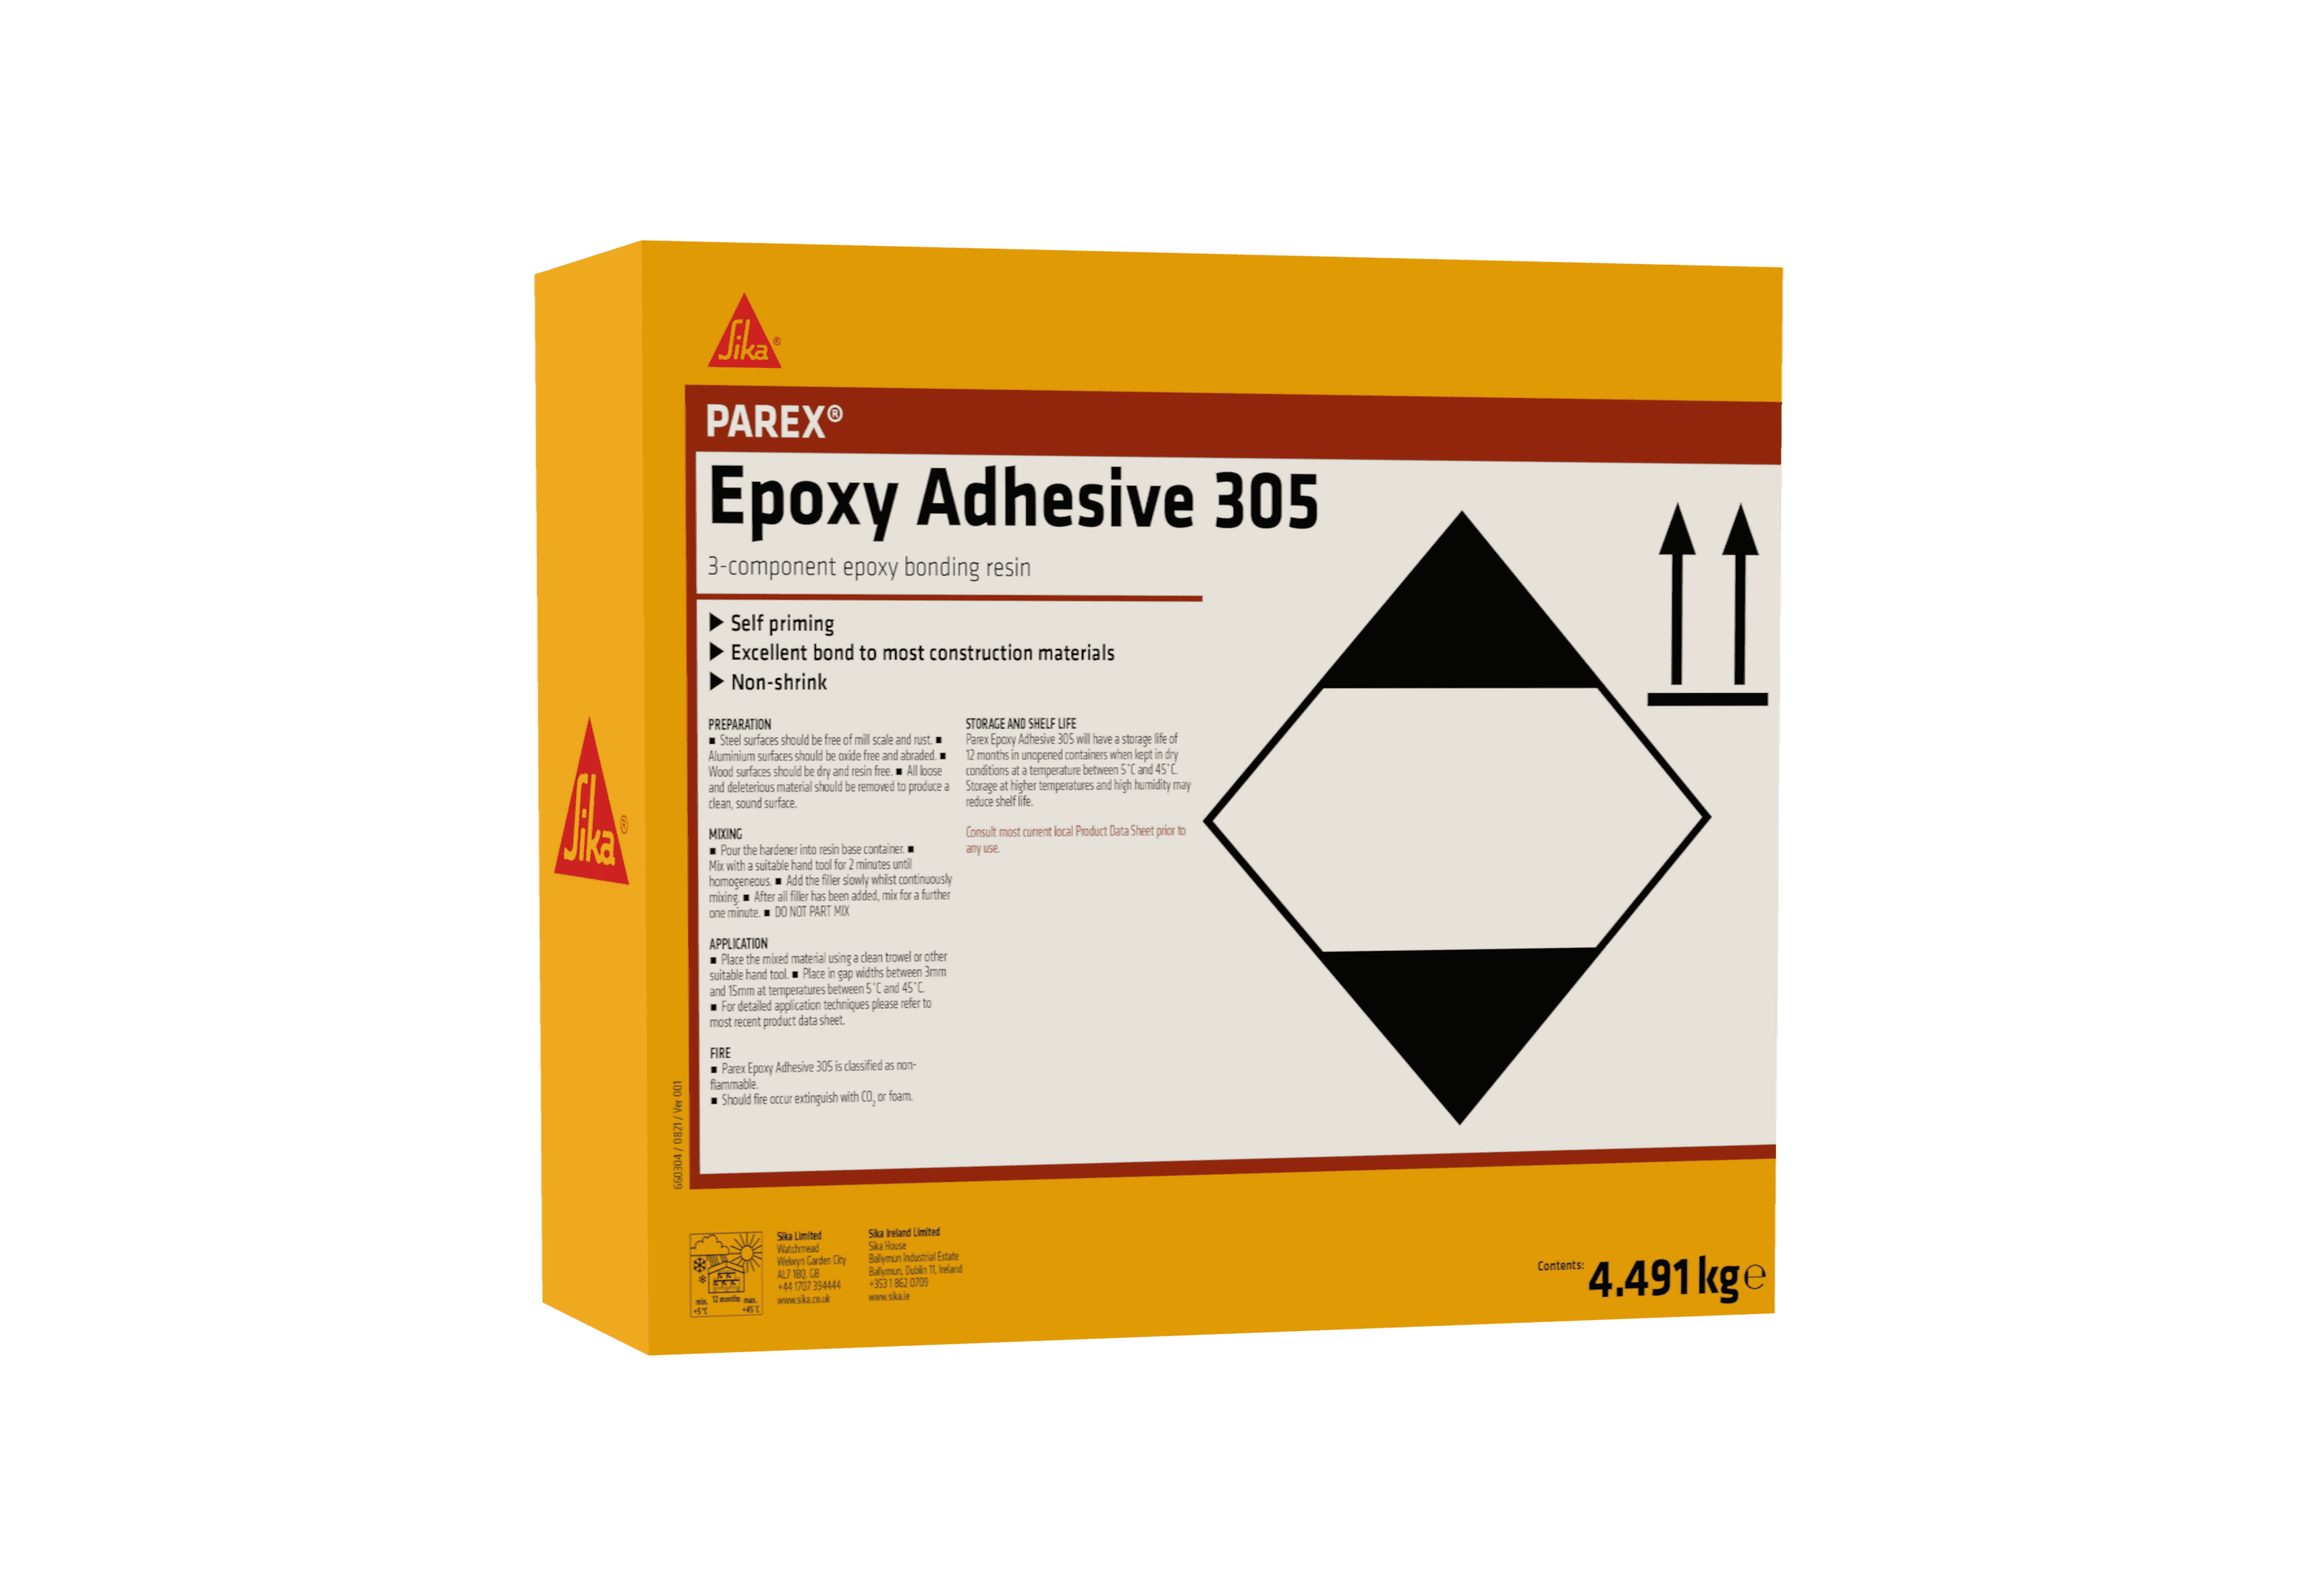 Parex Epoxy Adhesive 305